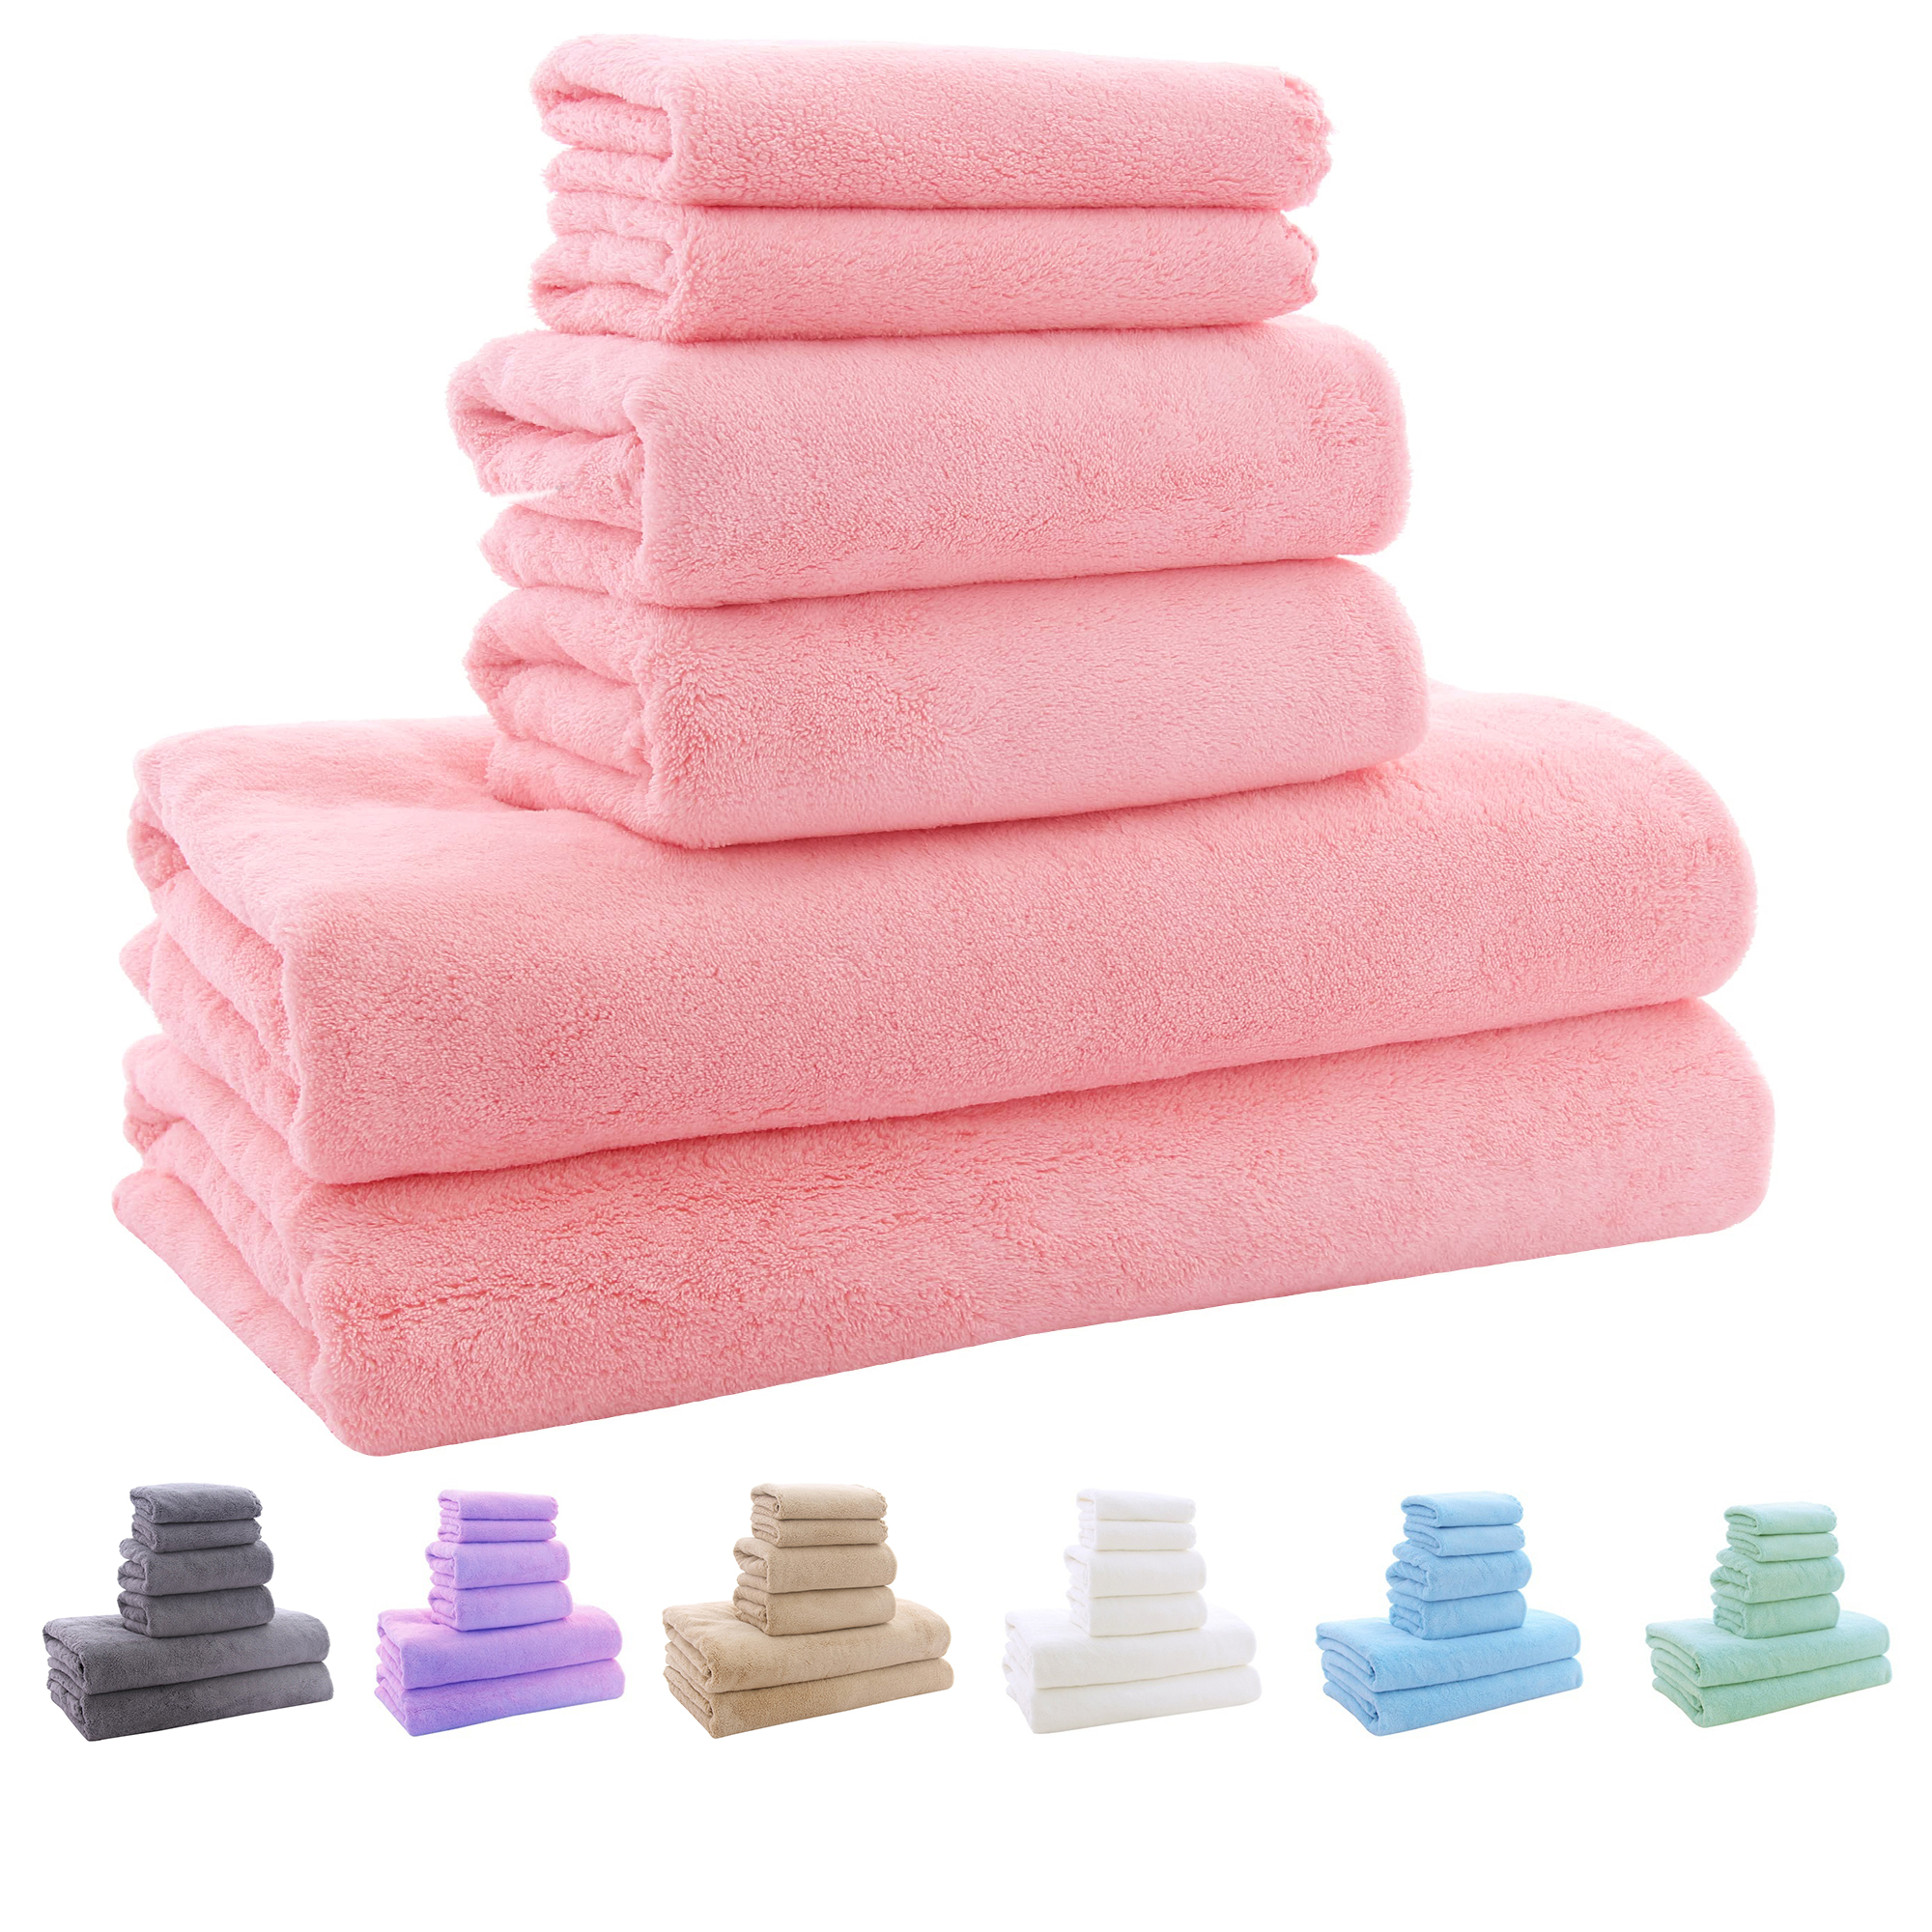 2pcs Set Luxury Super Large Towel High Absorbent Soft Coral Fleece Bath  Towel and Face Towels Set for Adults 70x140cm 35x75cm